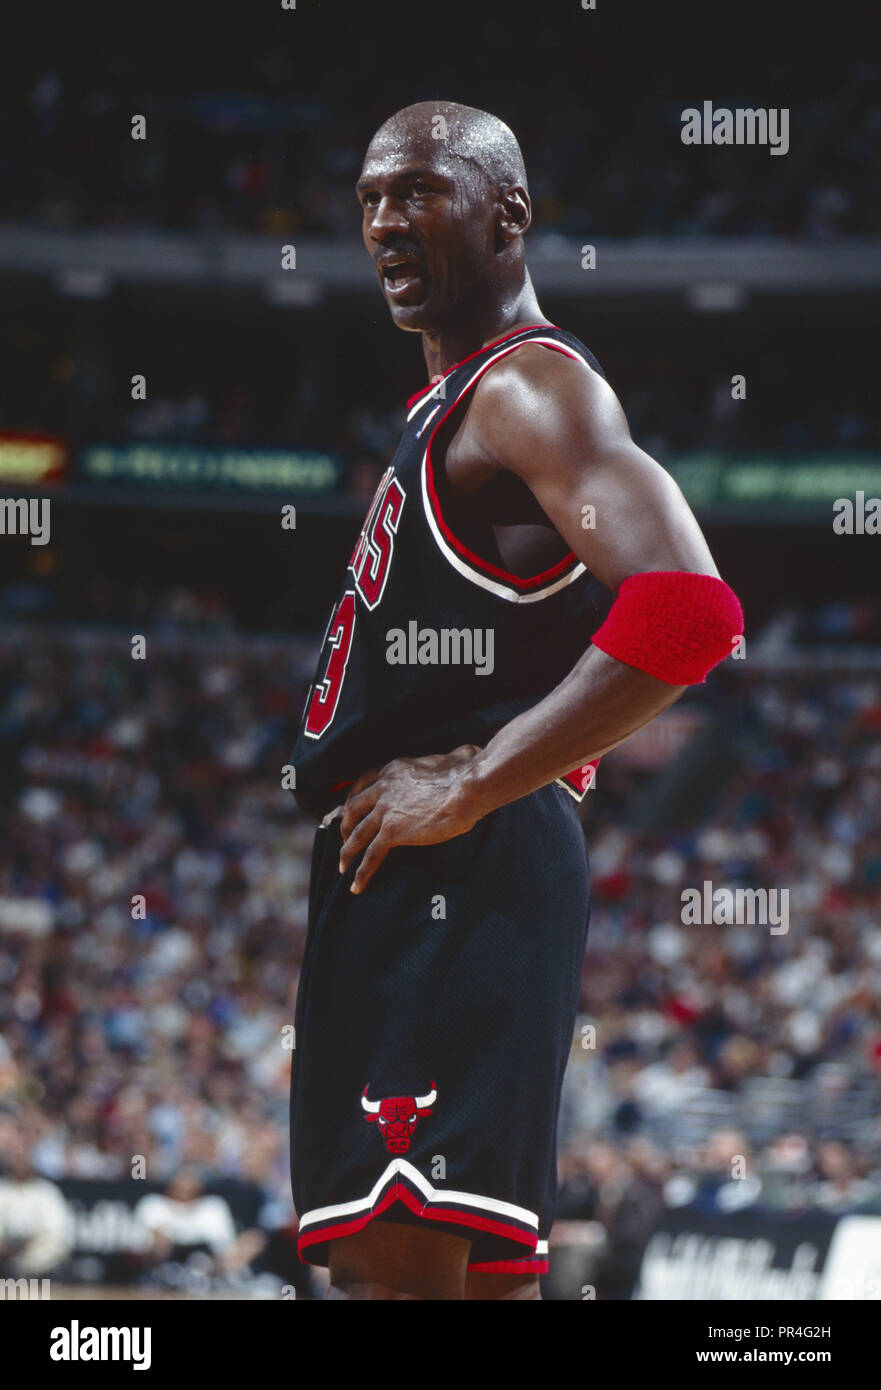 Michael Jordan Of The Chicago Bulls 1997 1998 Season Stock Photo Alamy